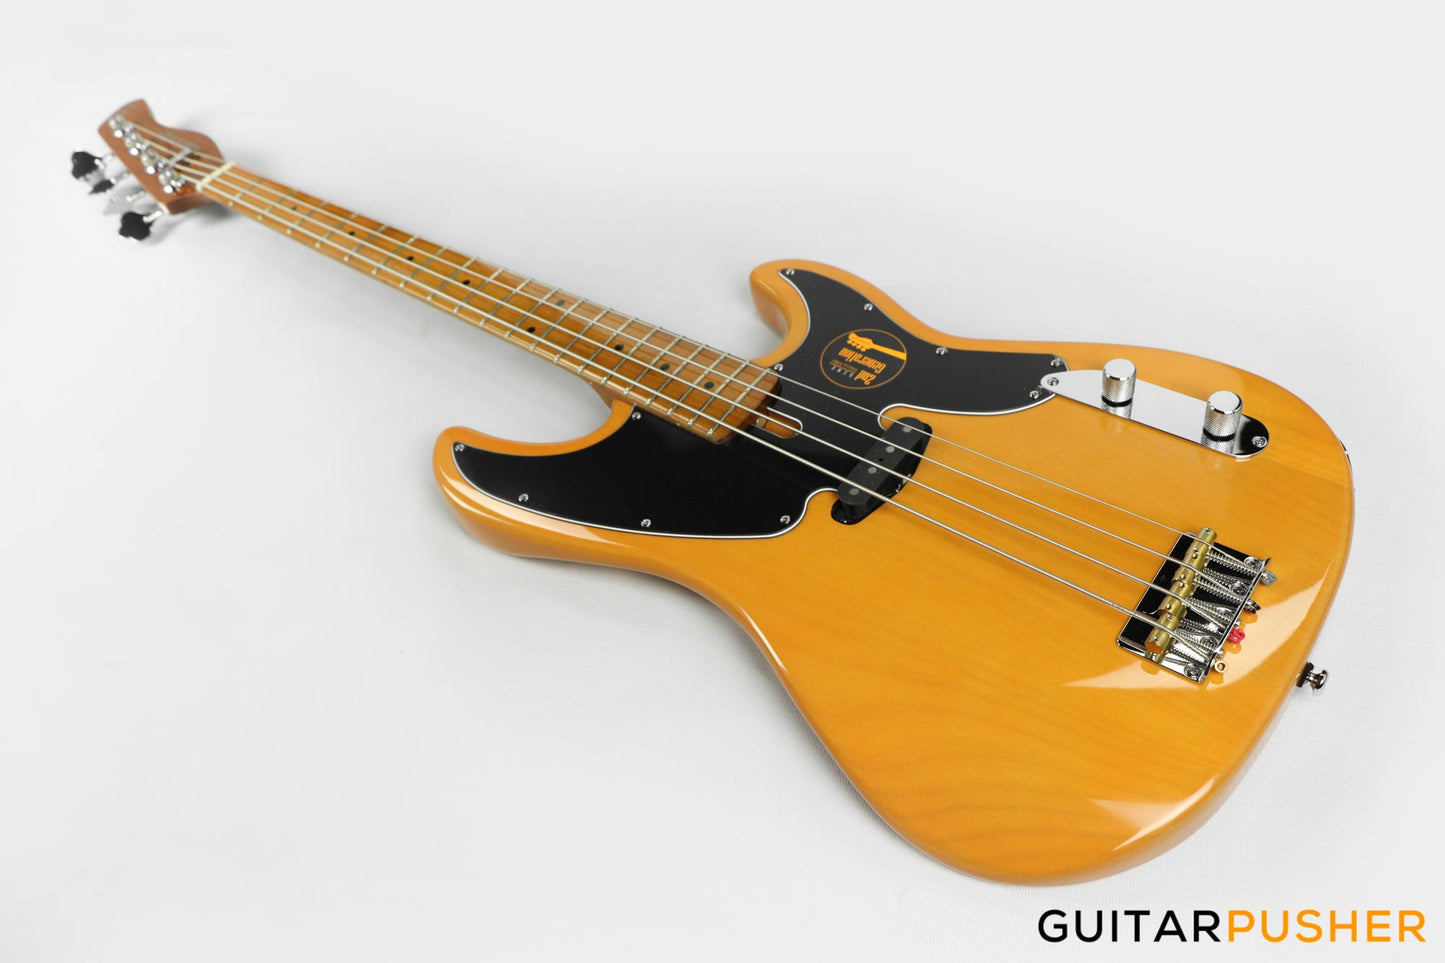 Sire D5 Alder 4-String Bass Guitar with Premium Gig Bag - Butterscotch Blonde